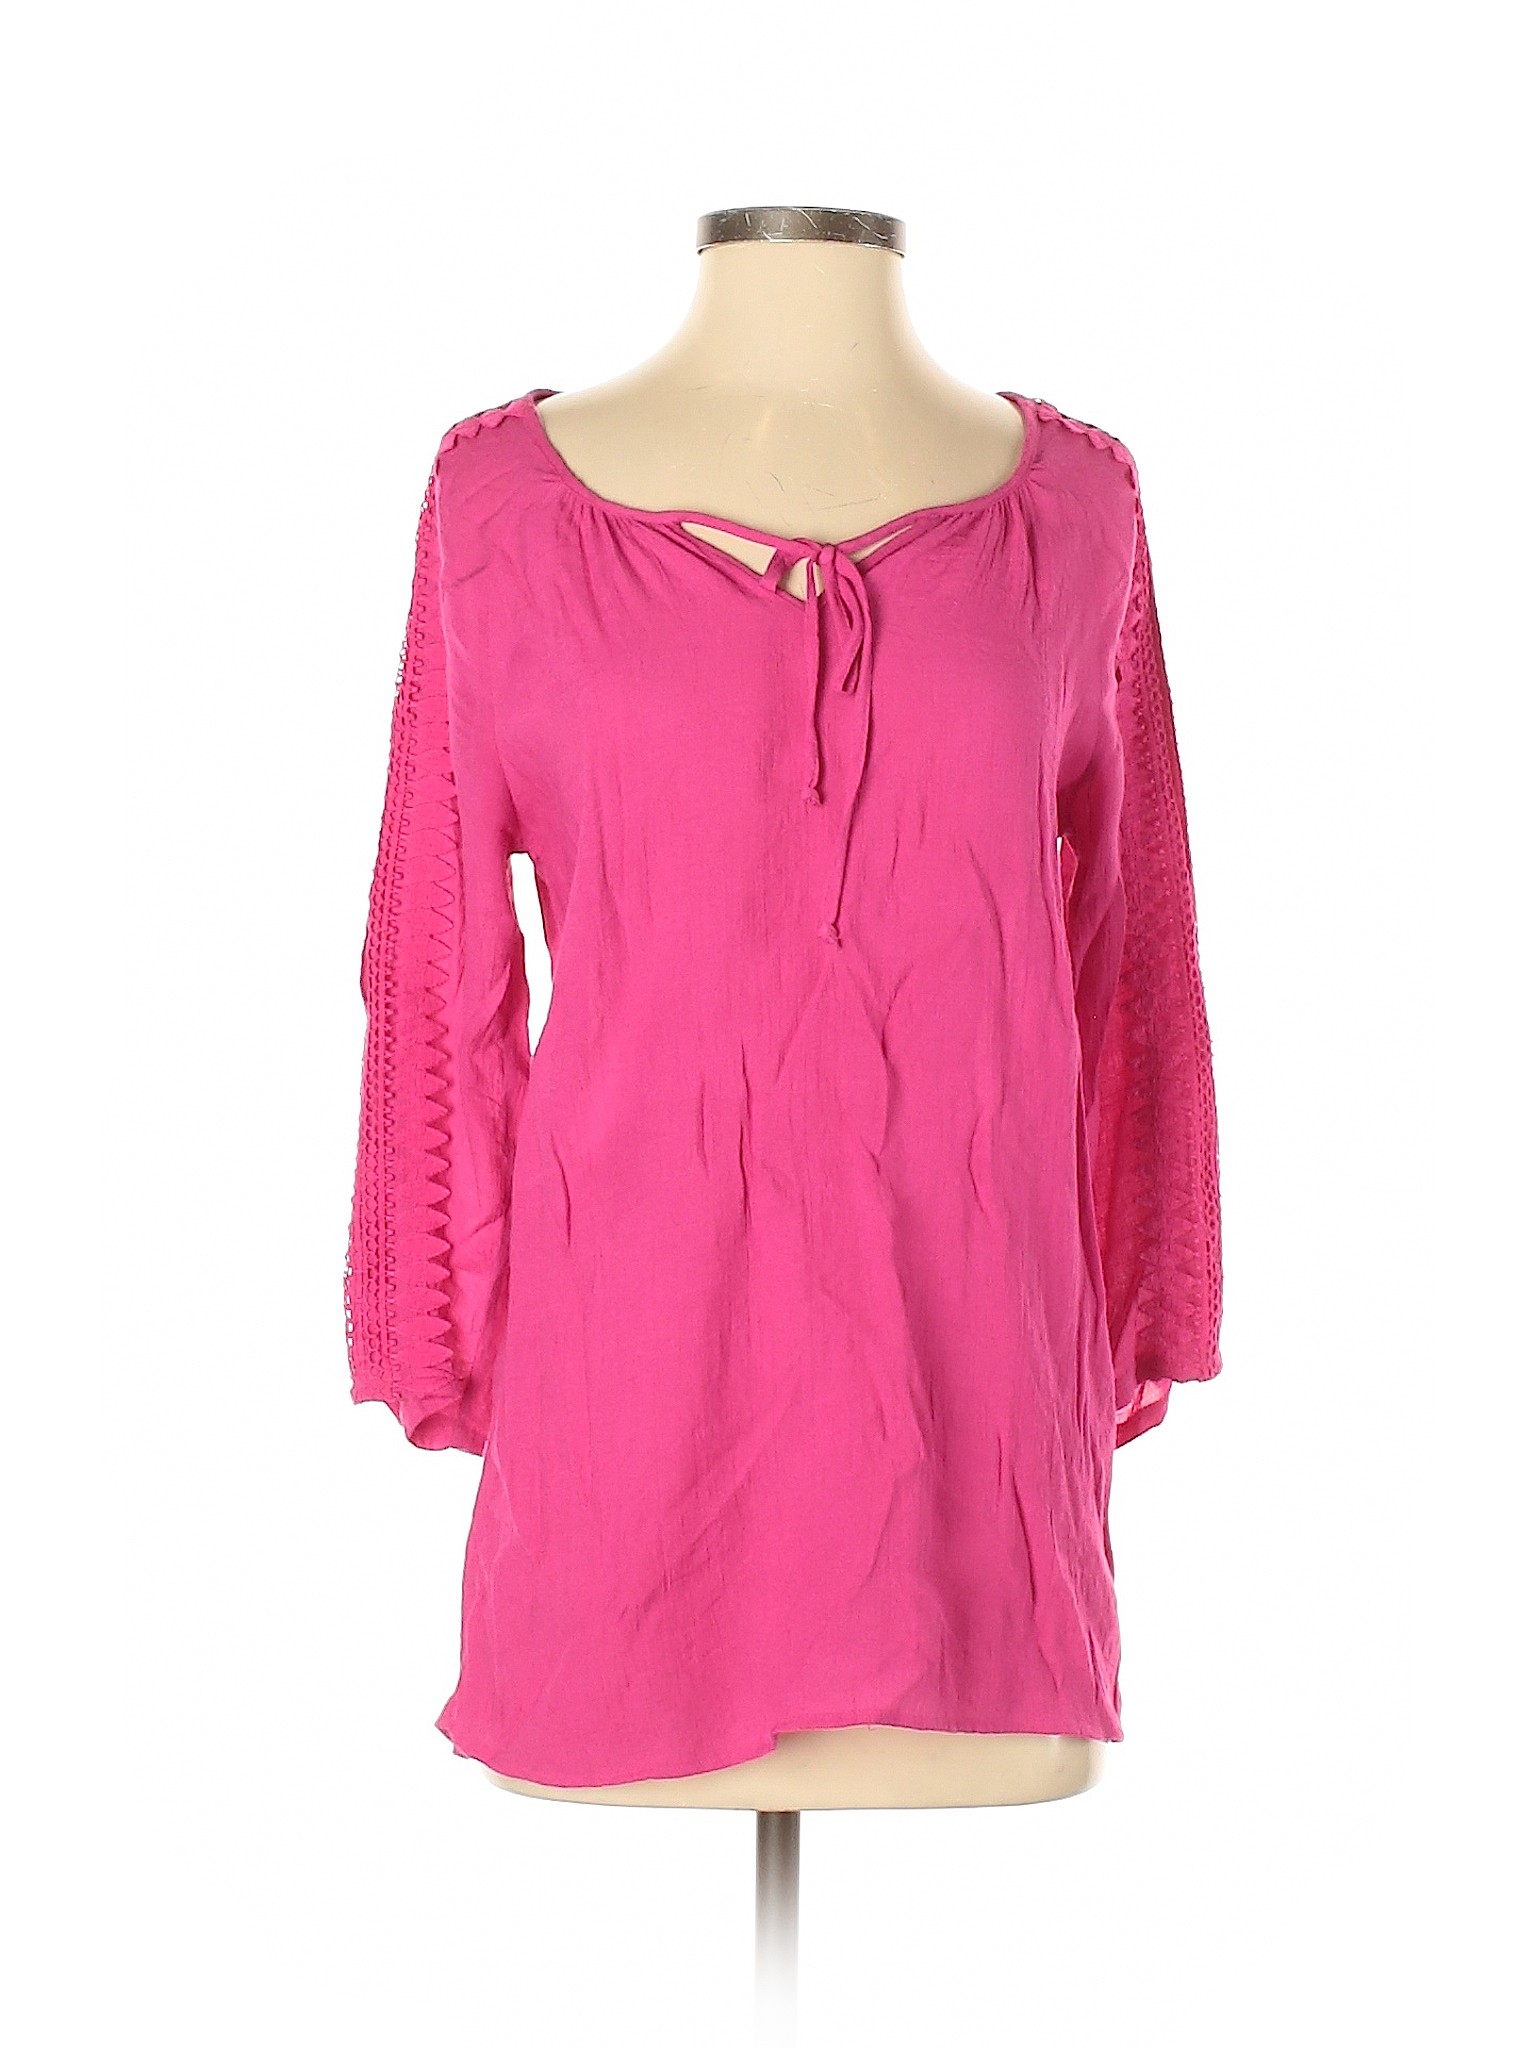 Studio Works Women Pink 3/4 Sleeve Blouse S | eBay